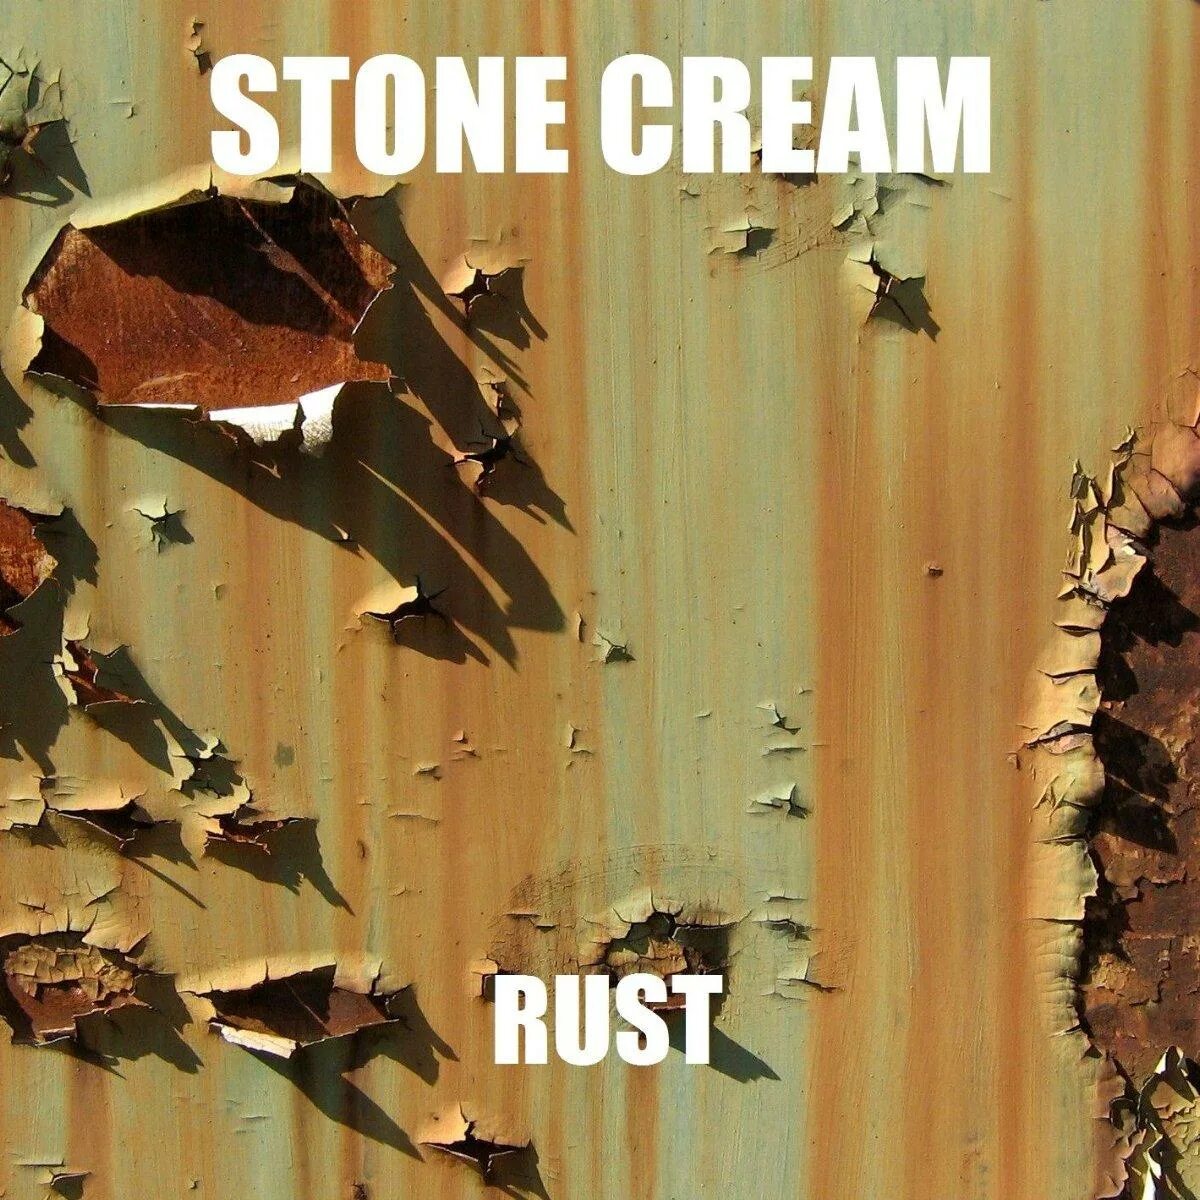 Stone cream. Stone Rust. Stone Cream - Jail Dog. Back to Stone обложка.